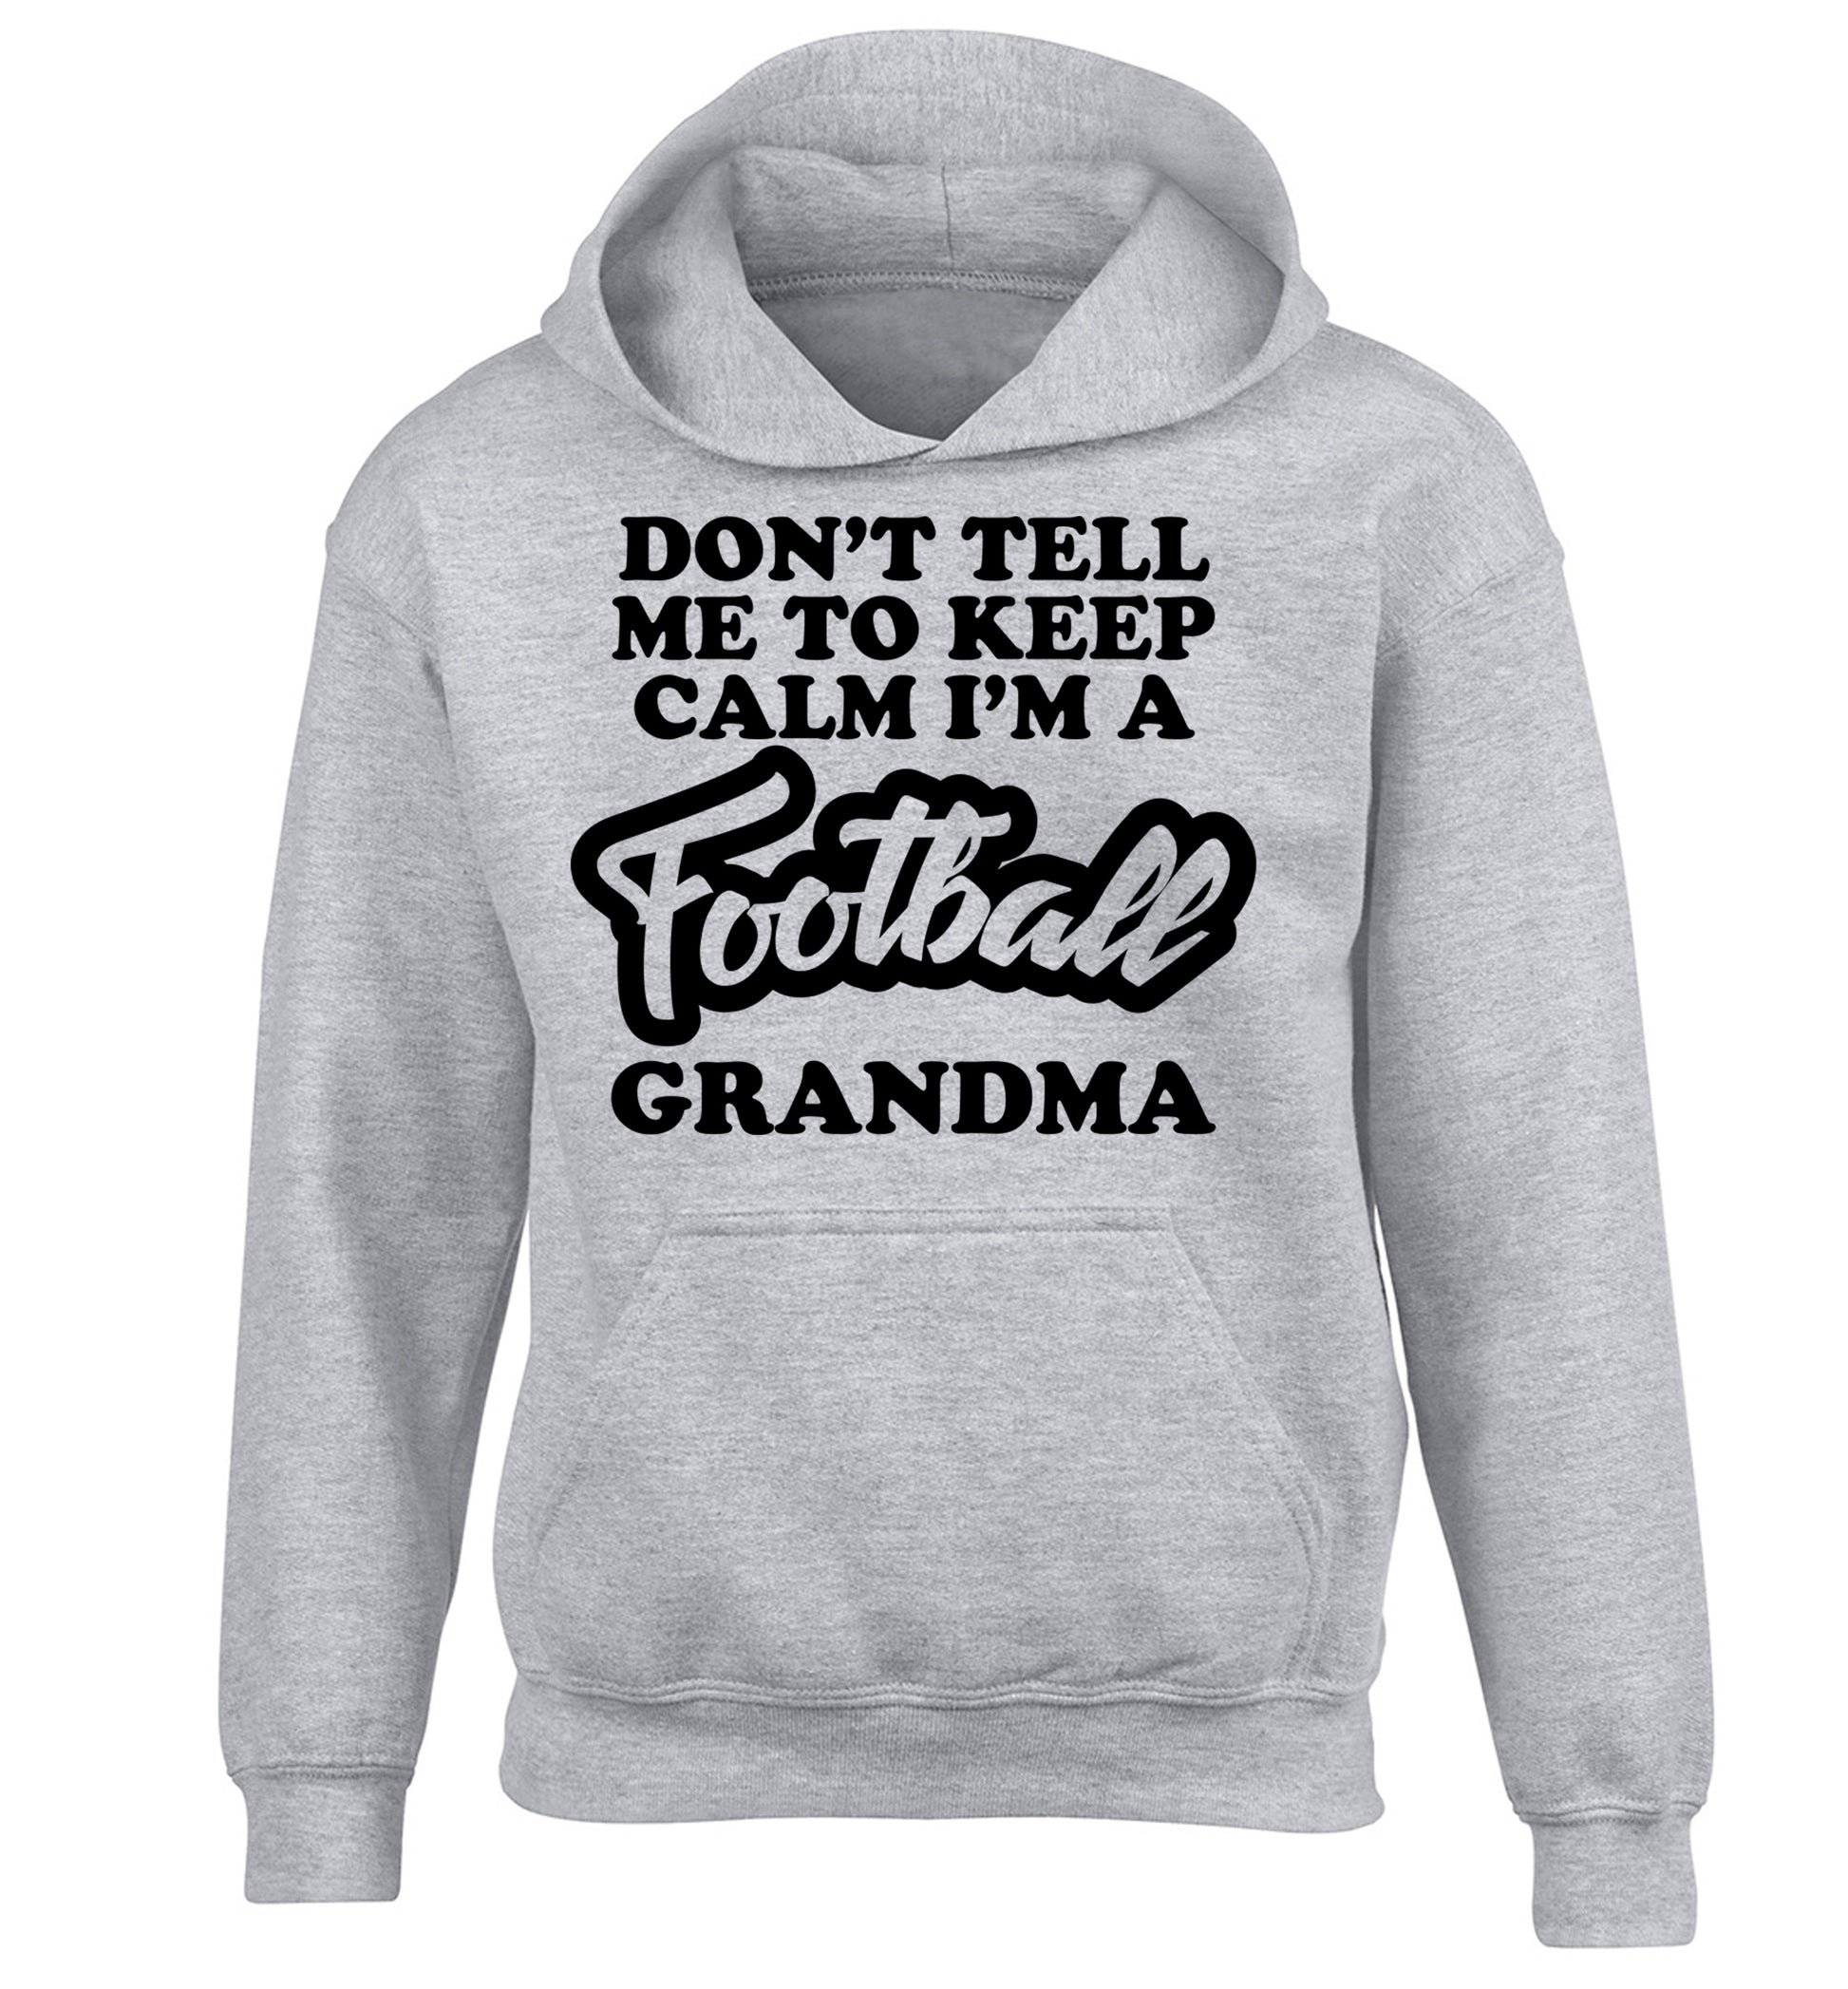 Don't tell me to keep calm I'm a football grandma children's grey hoodie 12-14 Years